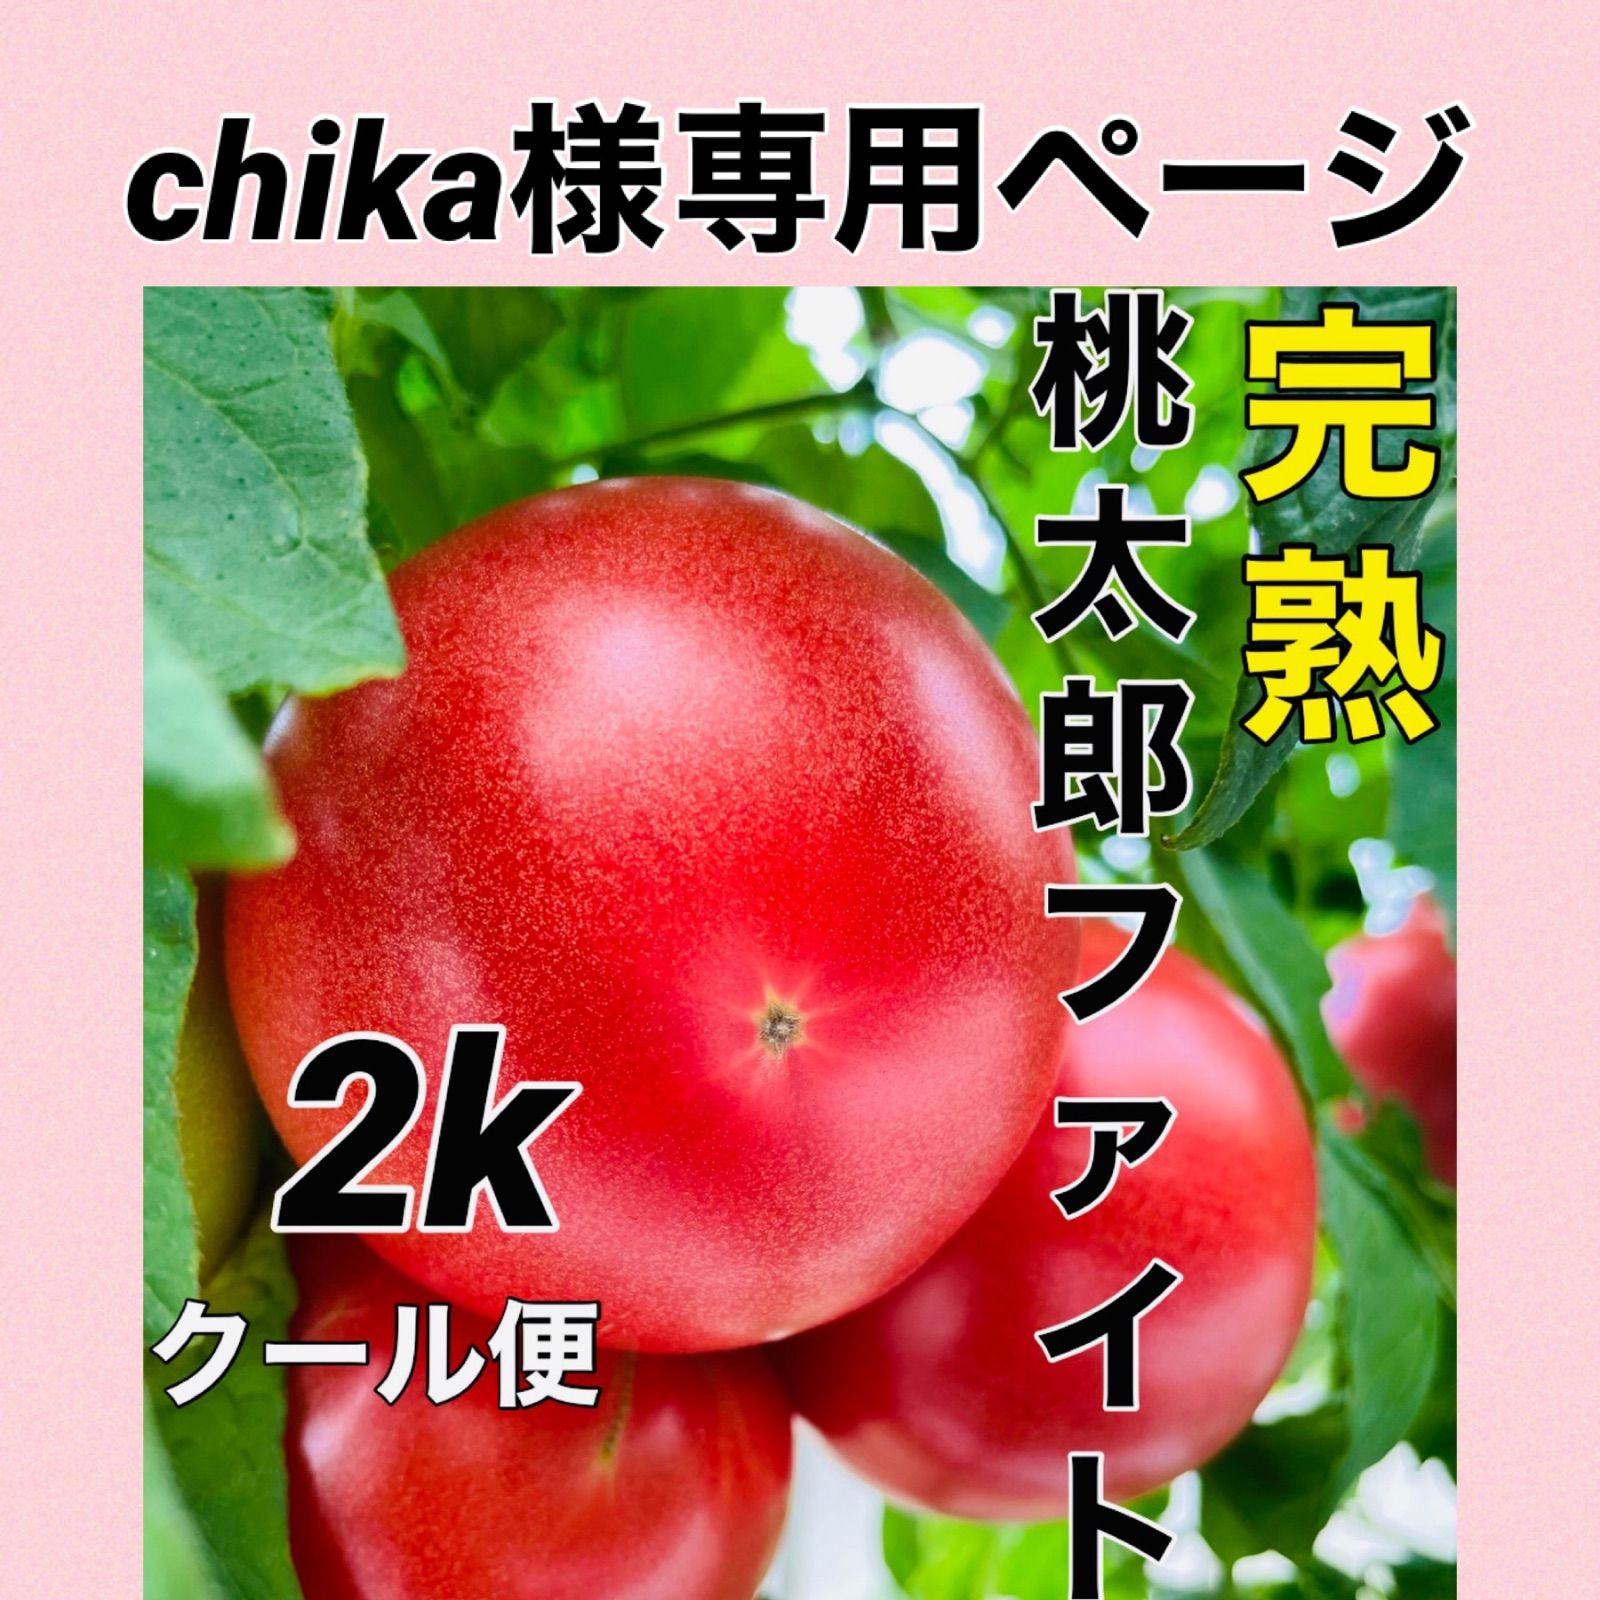 chika様専用ページ - 丹波のトマト屋さん - メルカリ